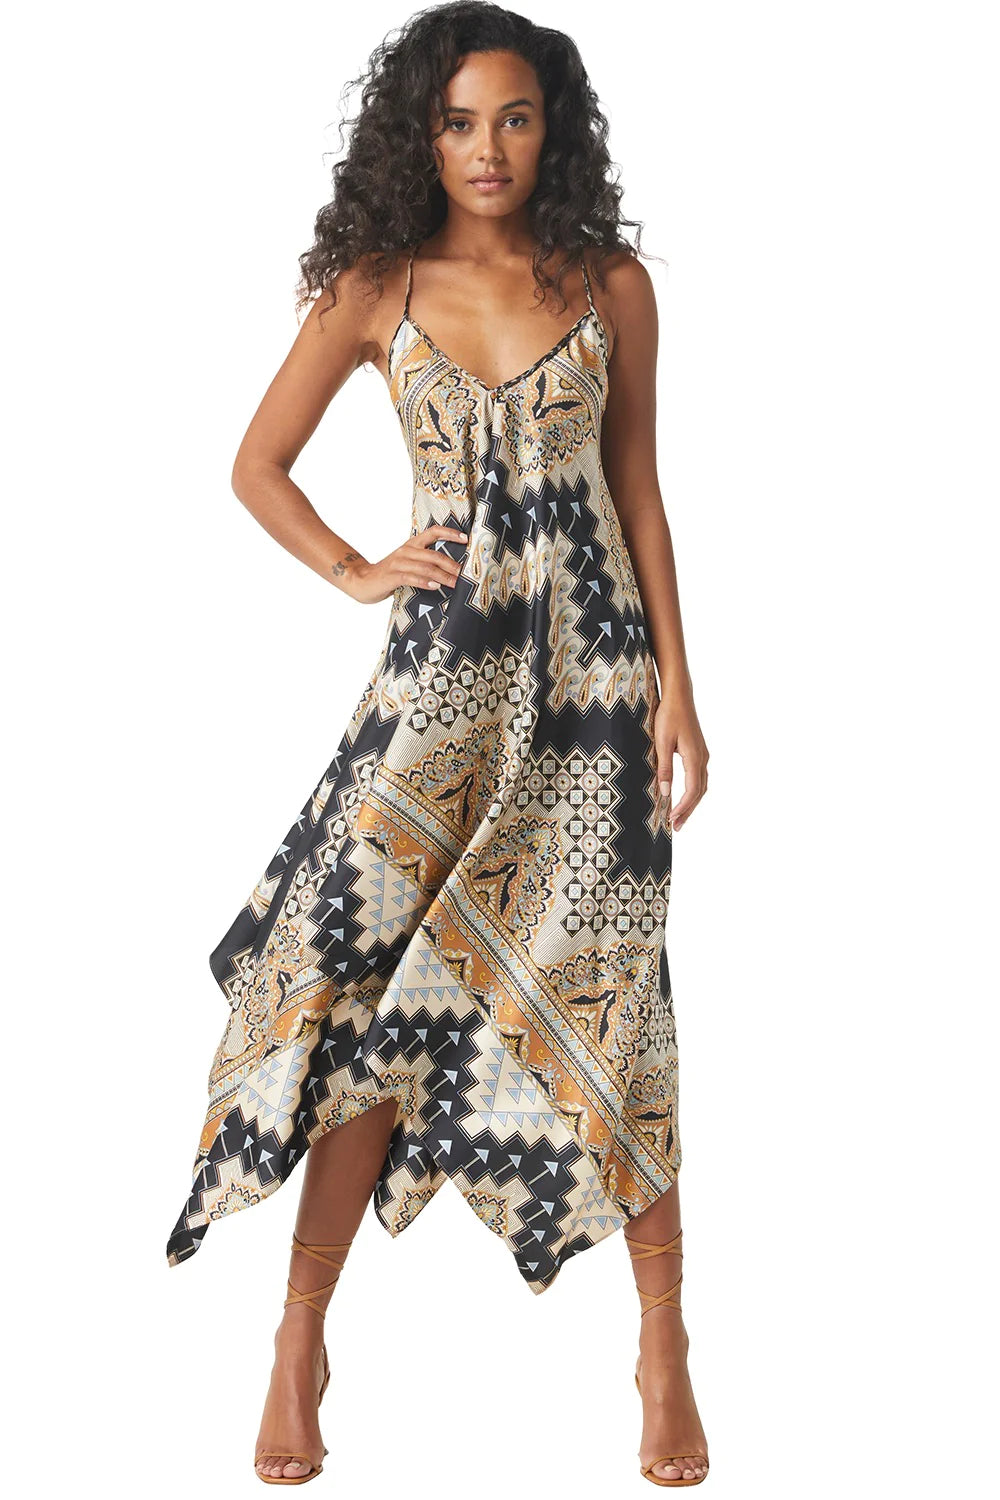 Misa - Alhambra Mosaic Delfina Dress